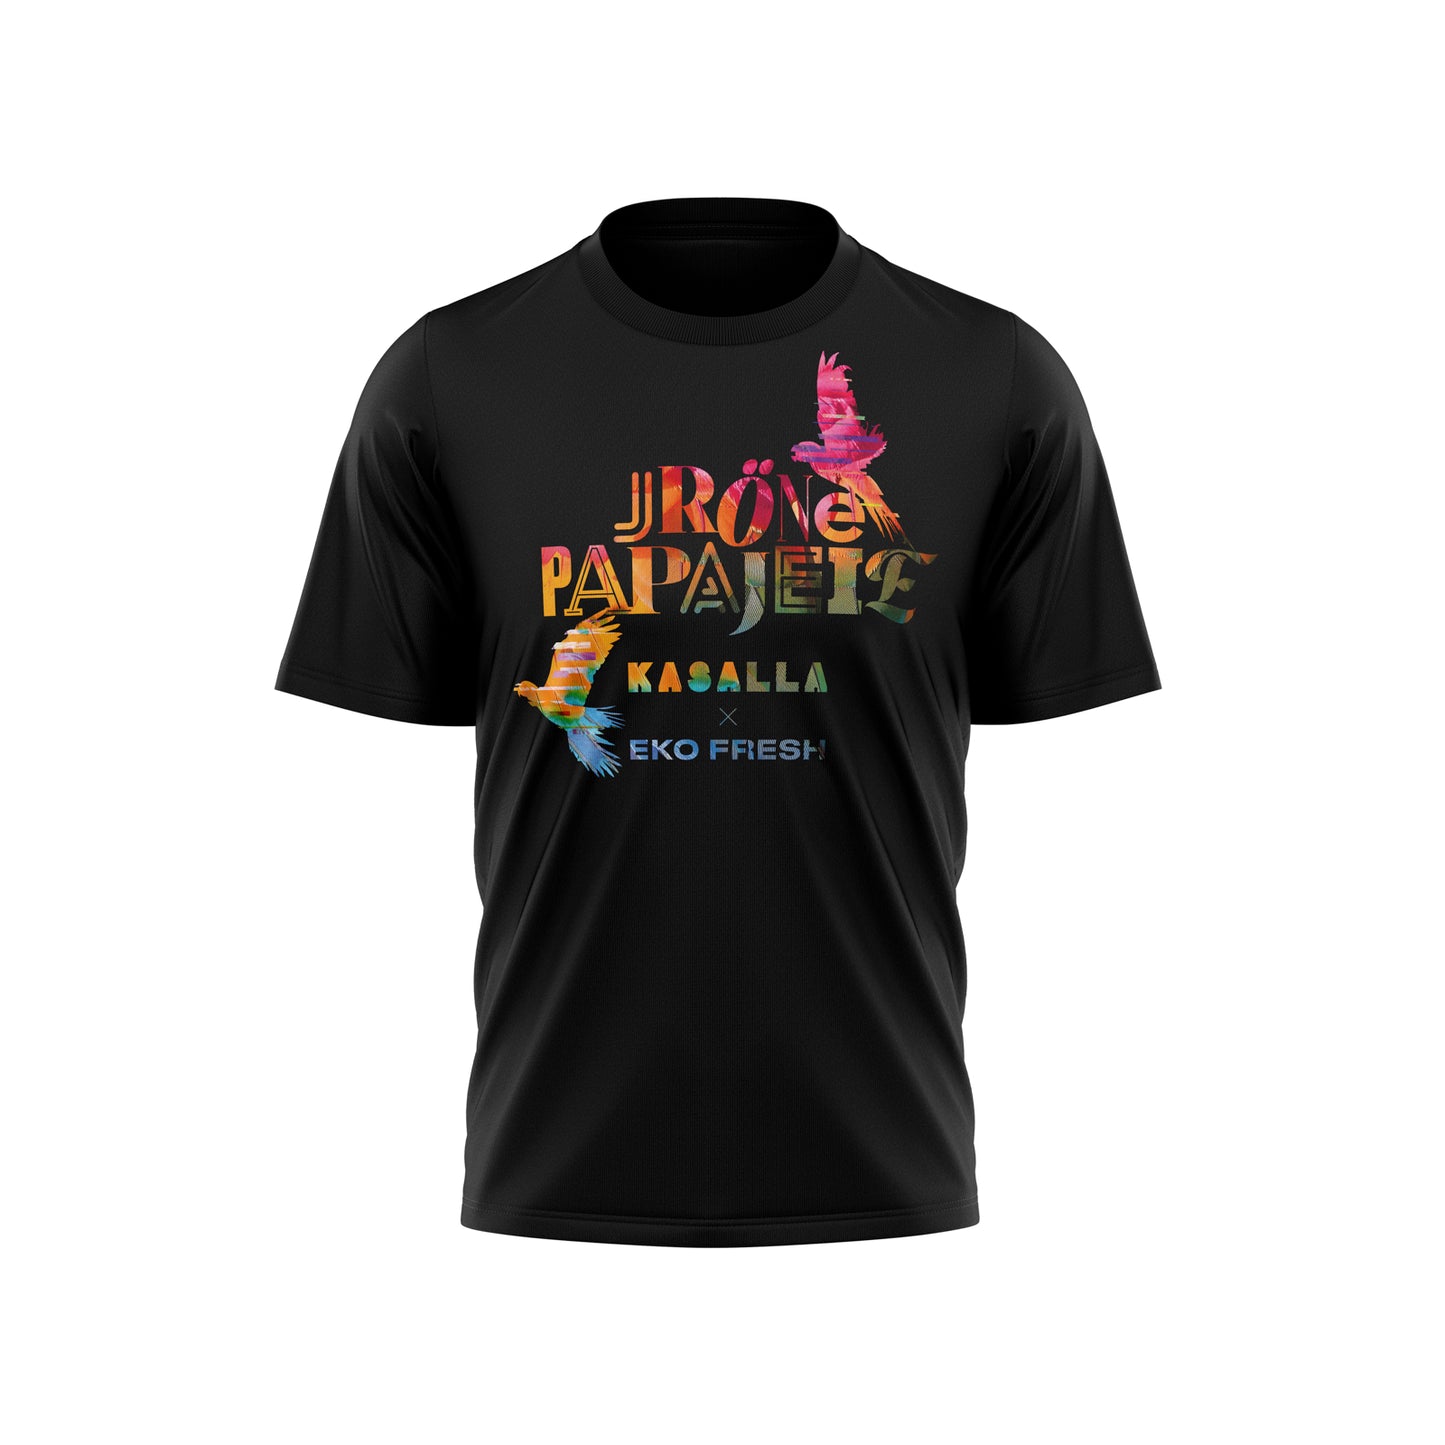 Unisex T-Shirt "Jröne Papajeie"